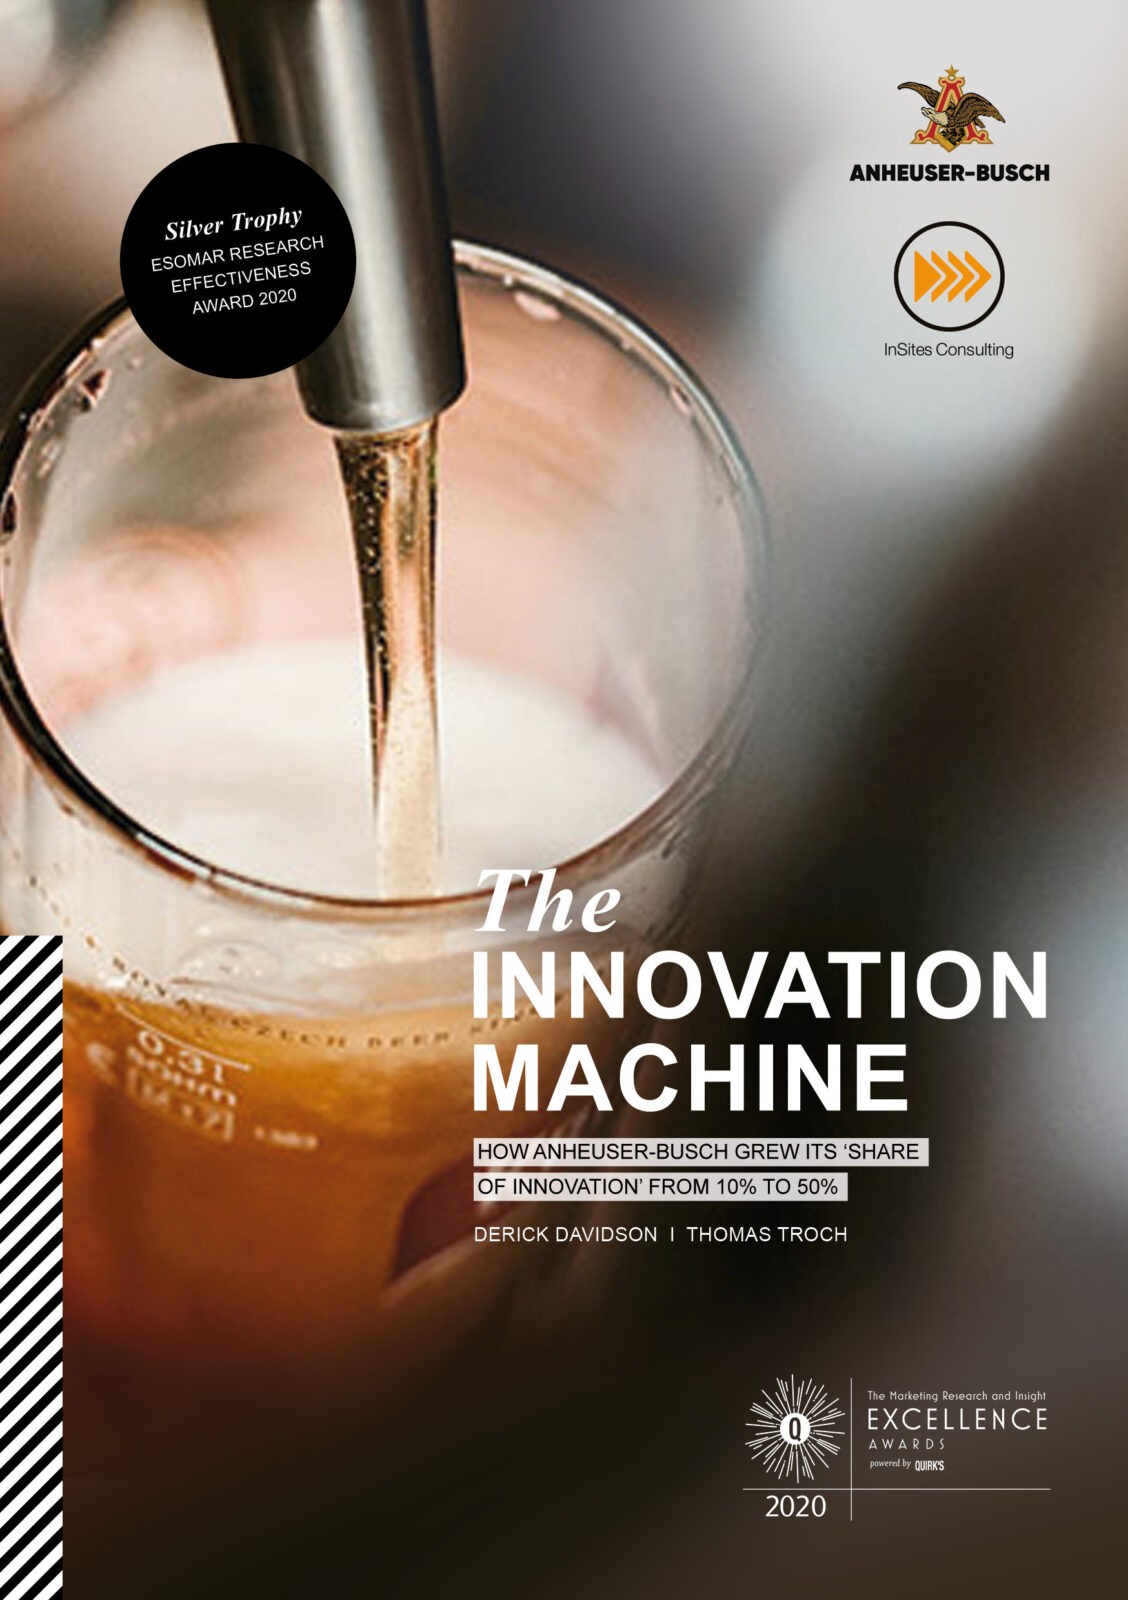 The Innovation Machine - an Anheuser-Busch case study